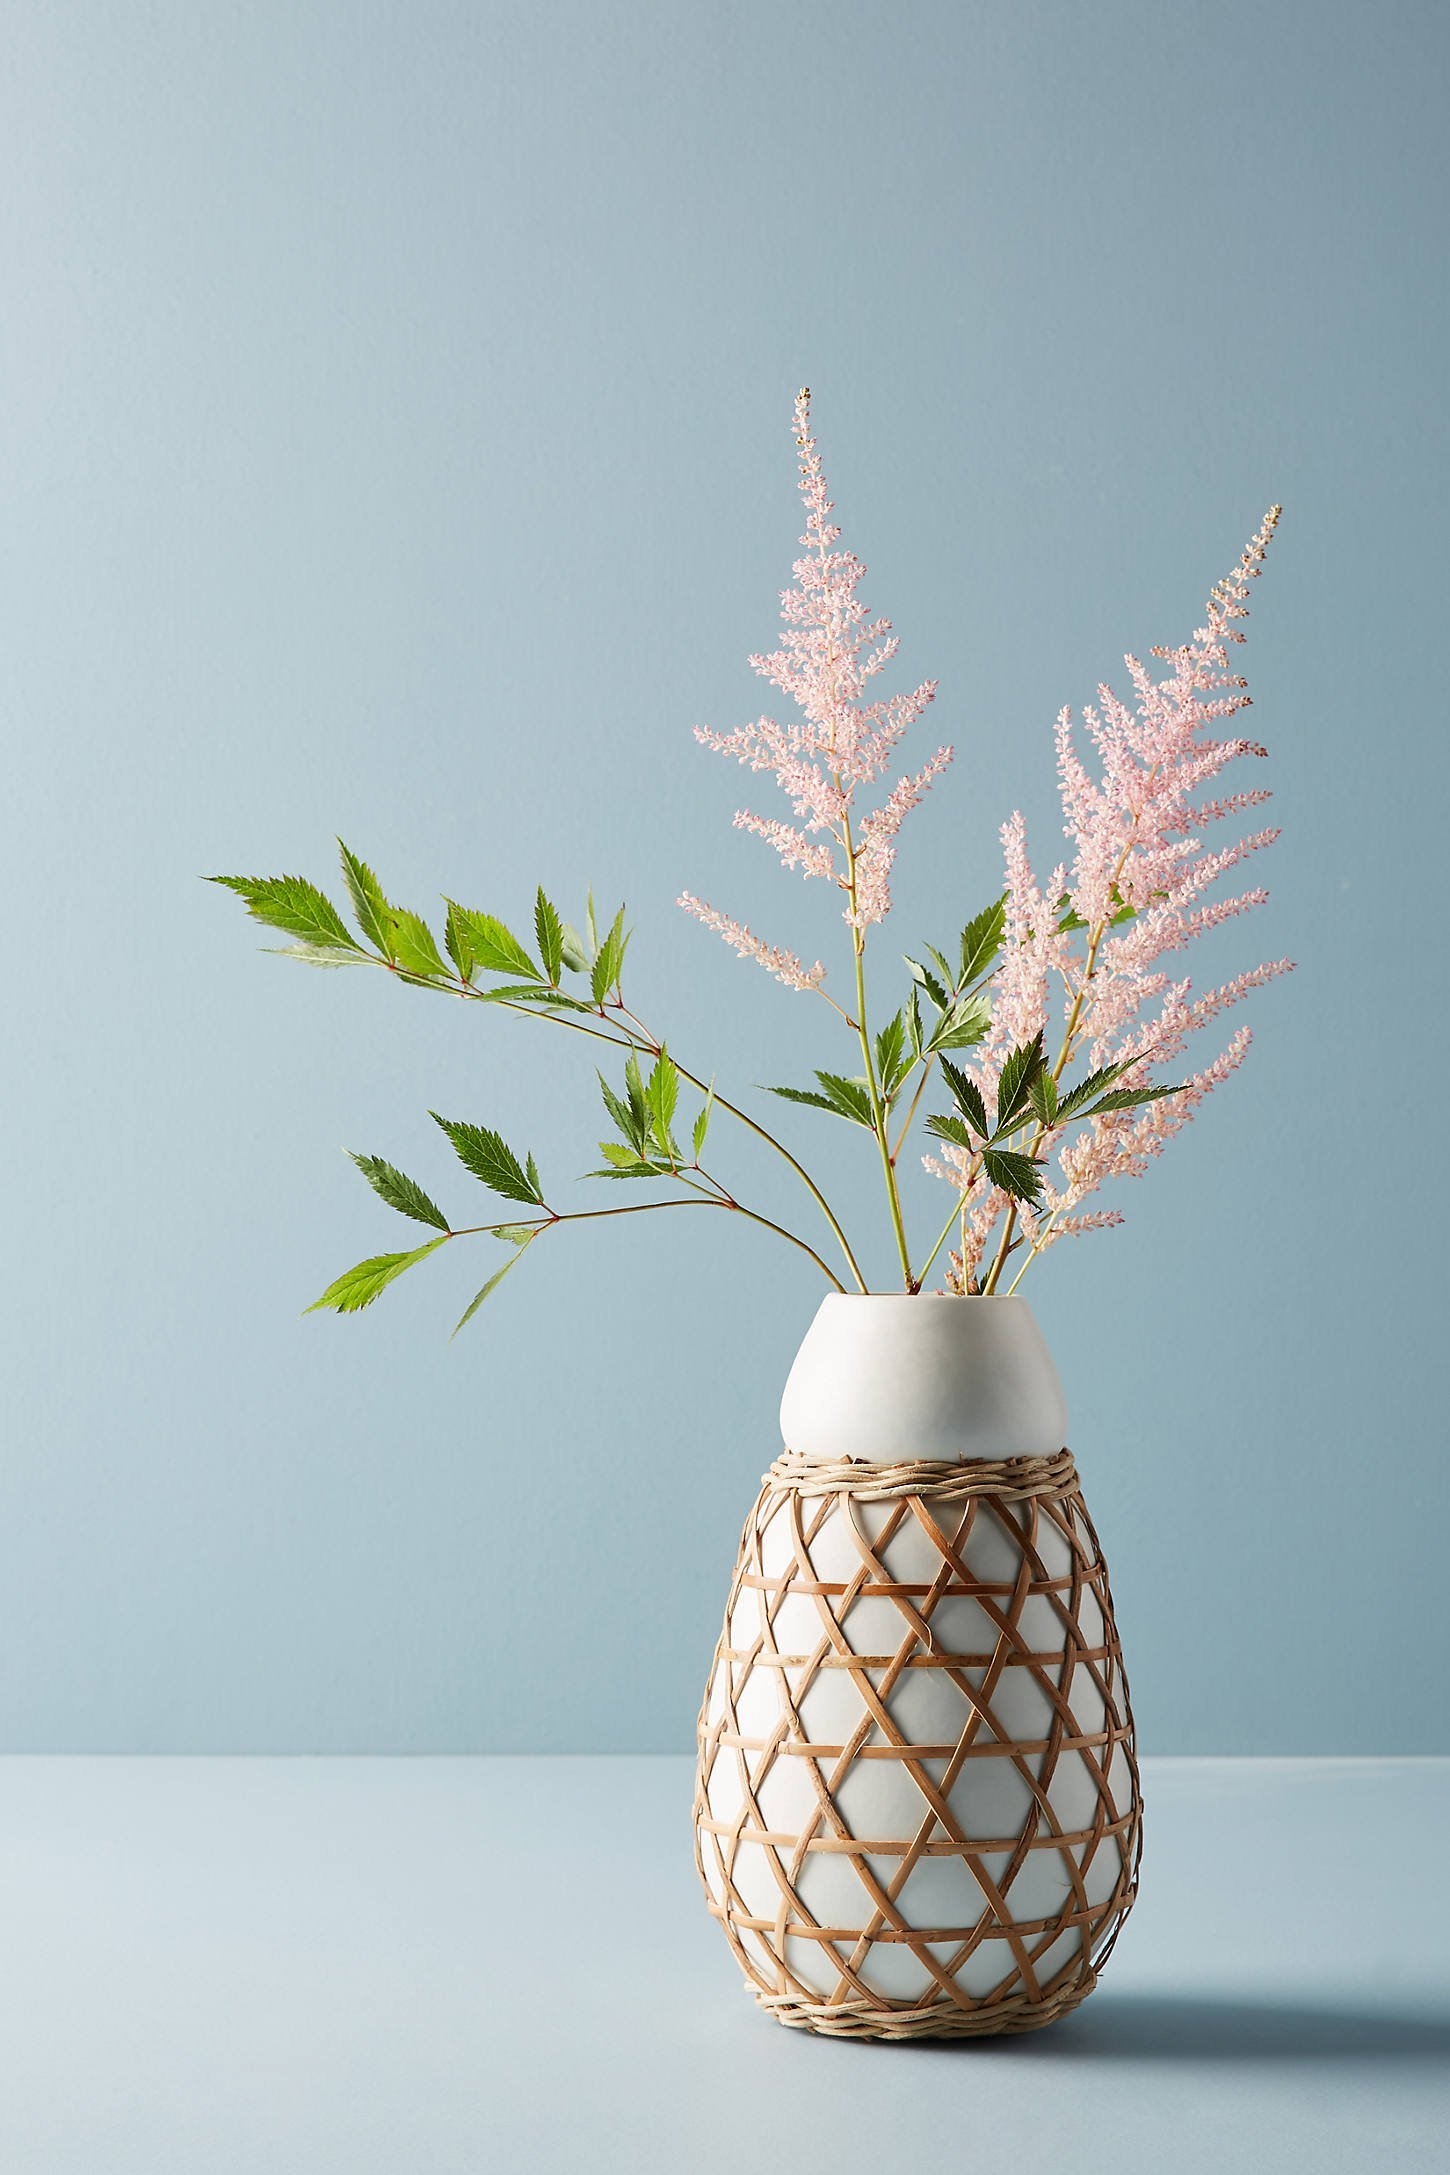 Woven Grass Vase - Image 1